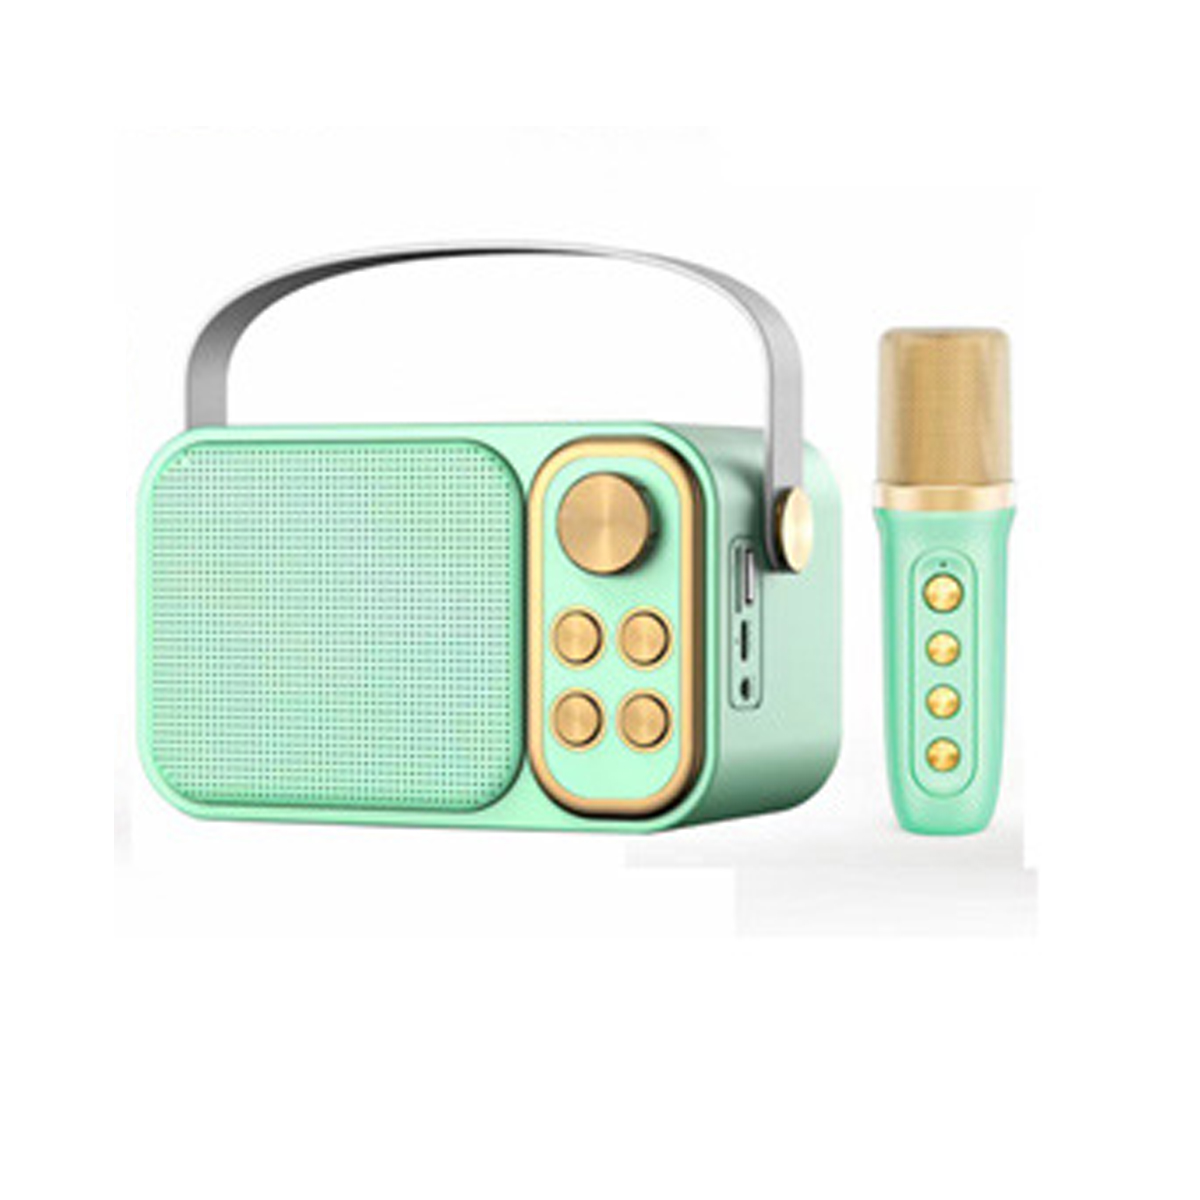 Gesang all-in-one Subwoofer drahtlosen Bluetooth-Lautsprecher Mikrofon Lautsprecher Freien im Song K SYNTEK Gold Bluetooth-Lautsprecher,